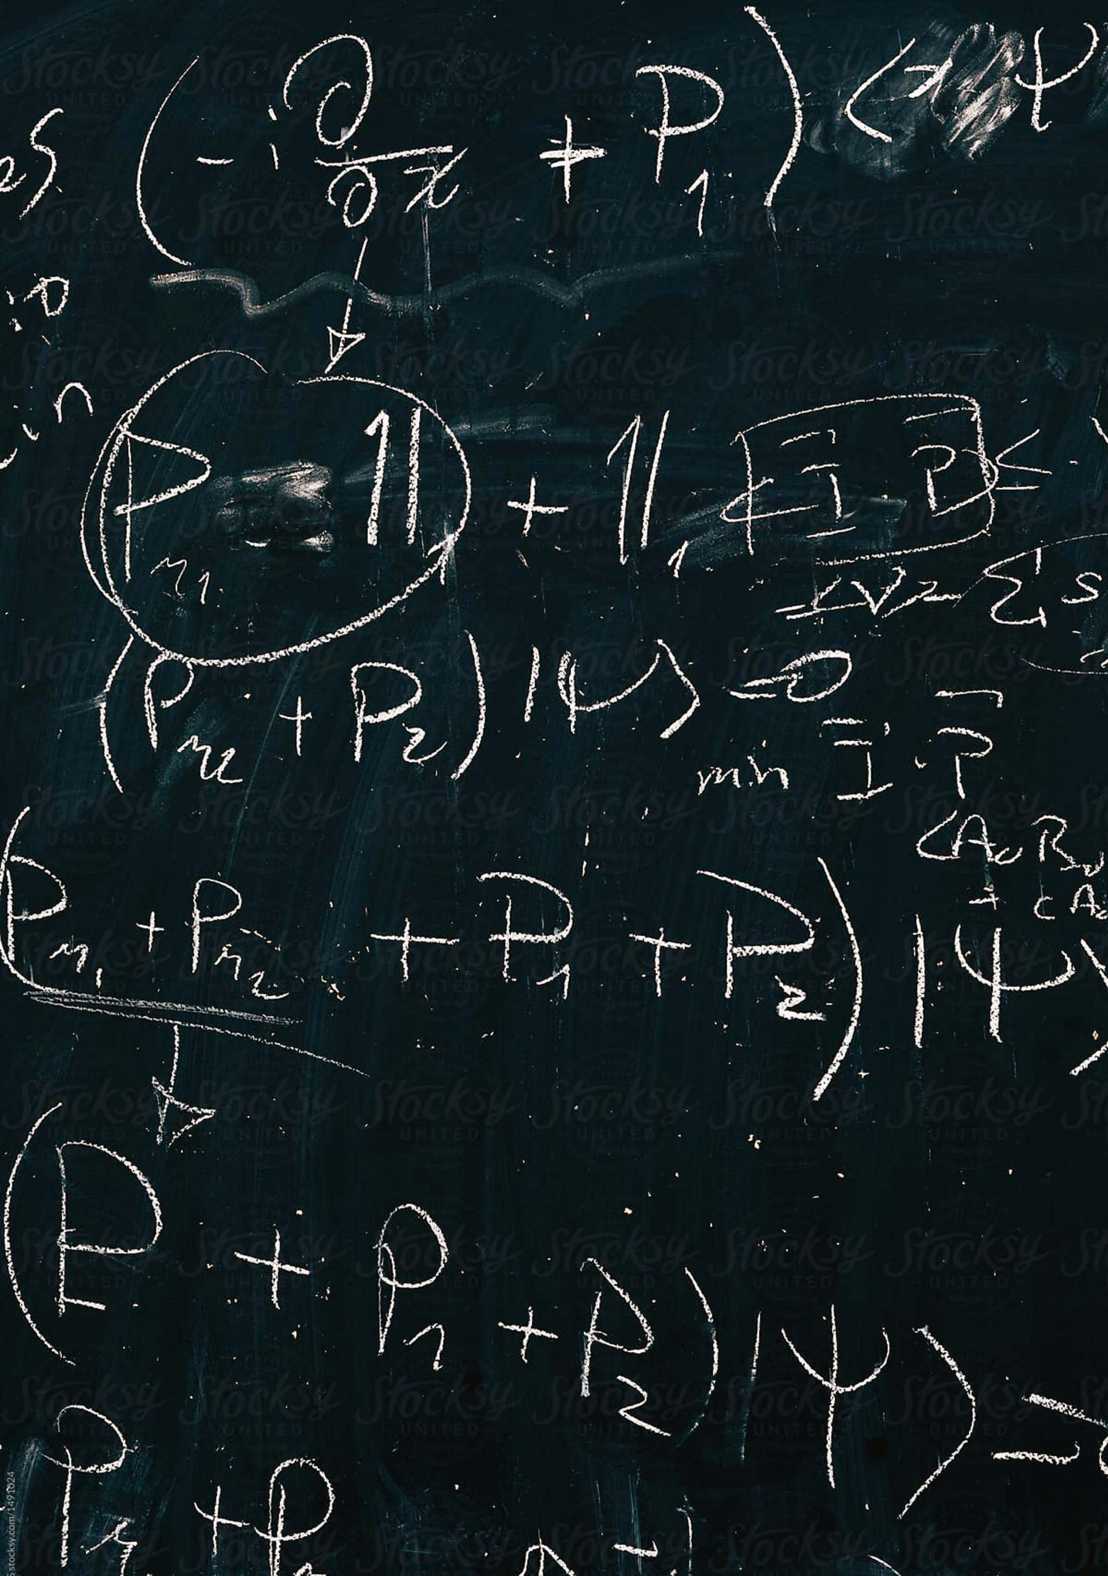 A blackboard with mathematical formulas written on it